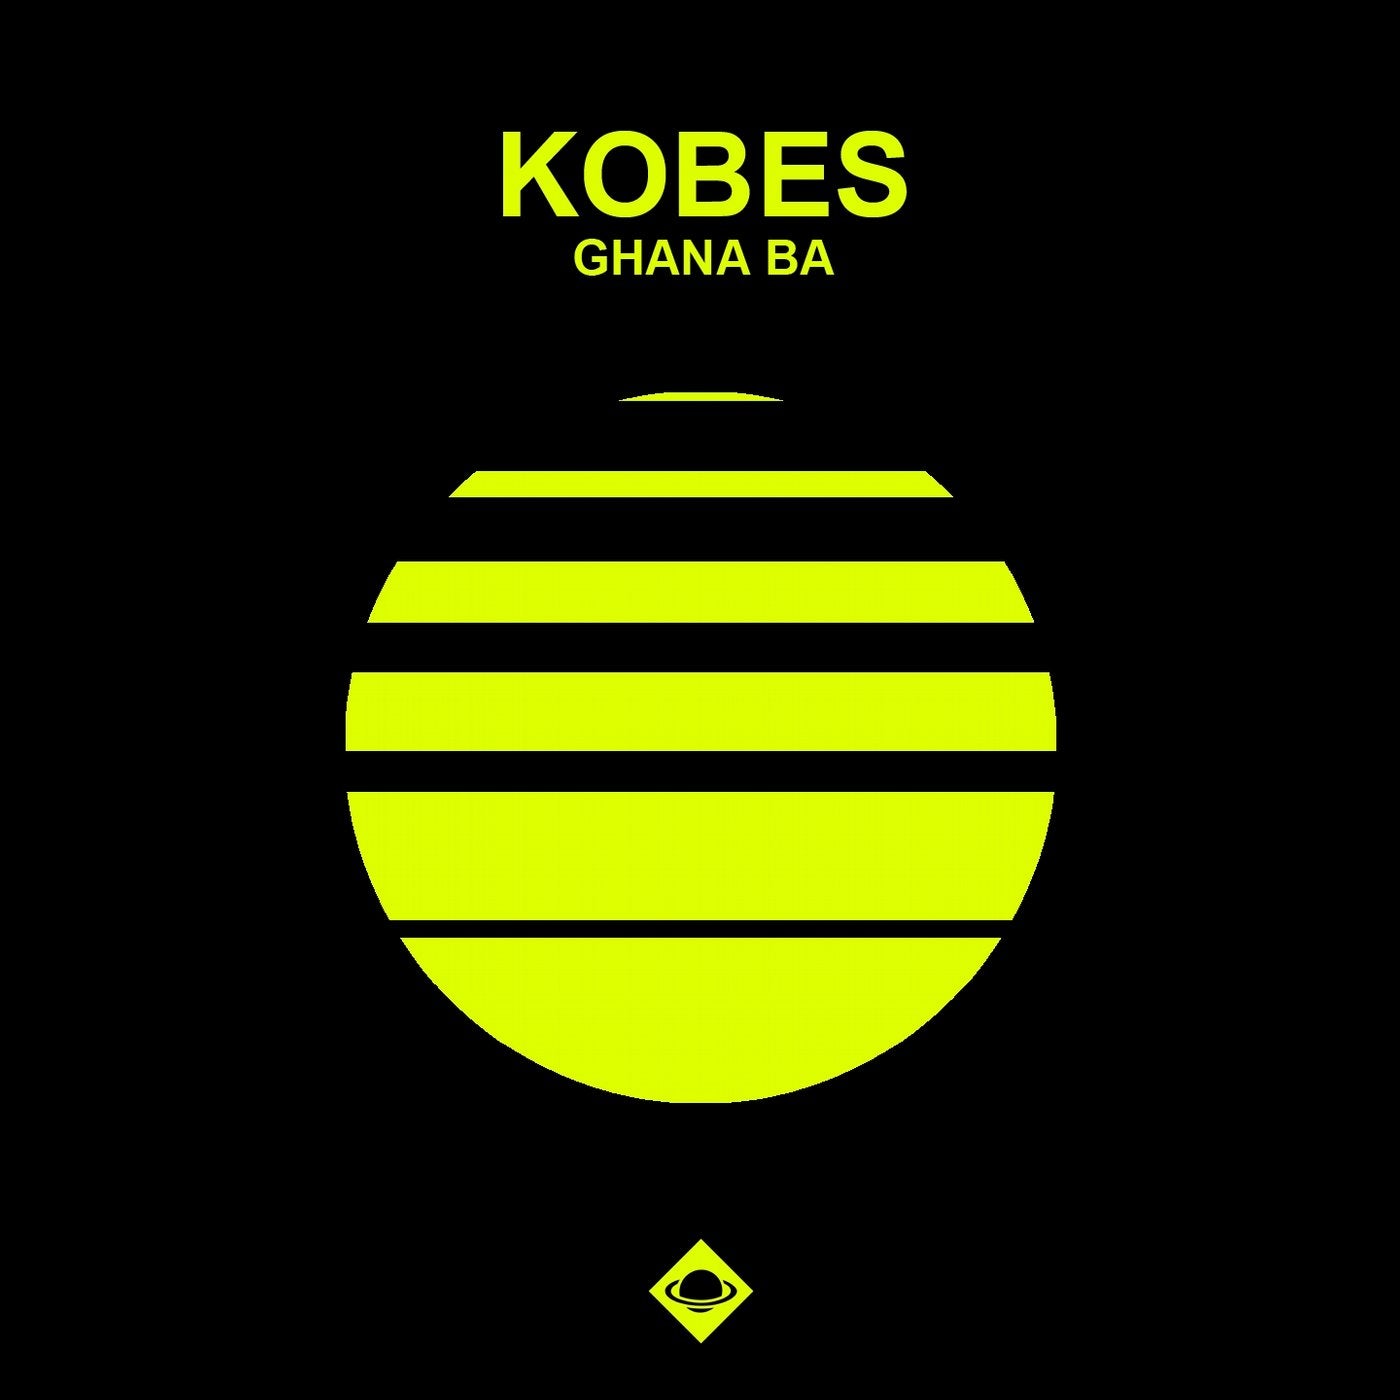 Ghana Ba